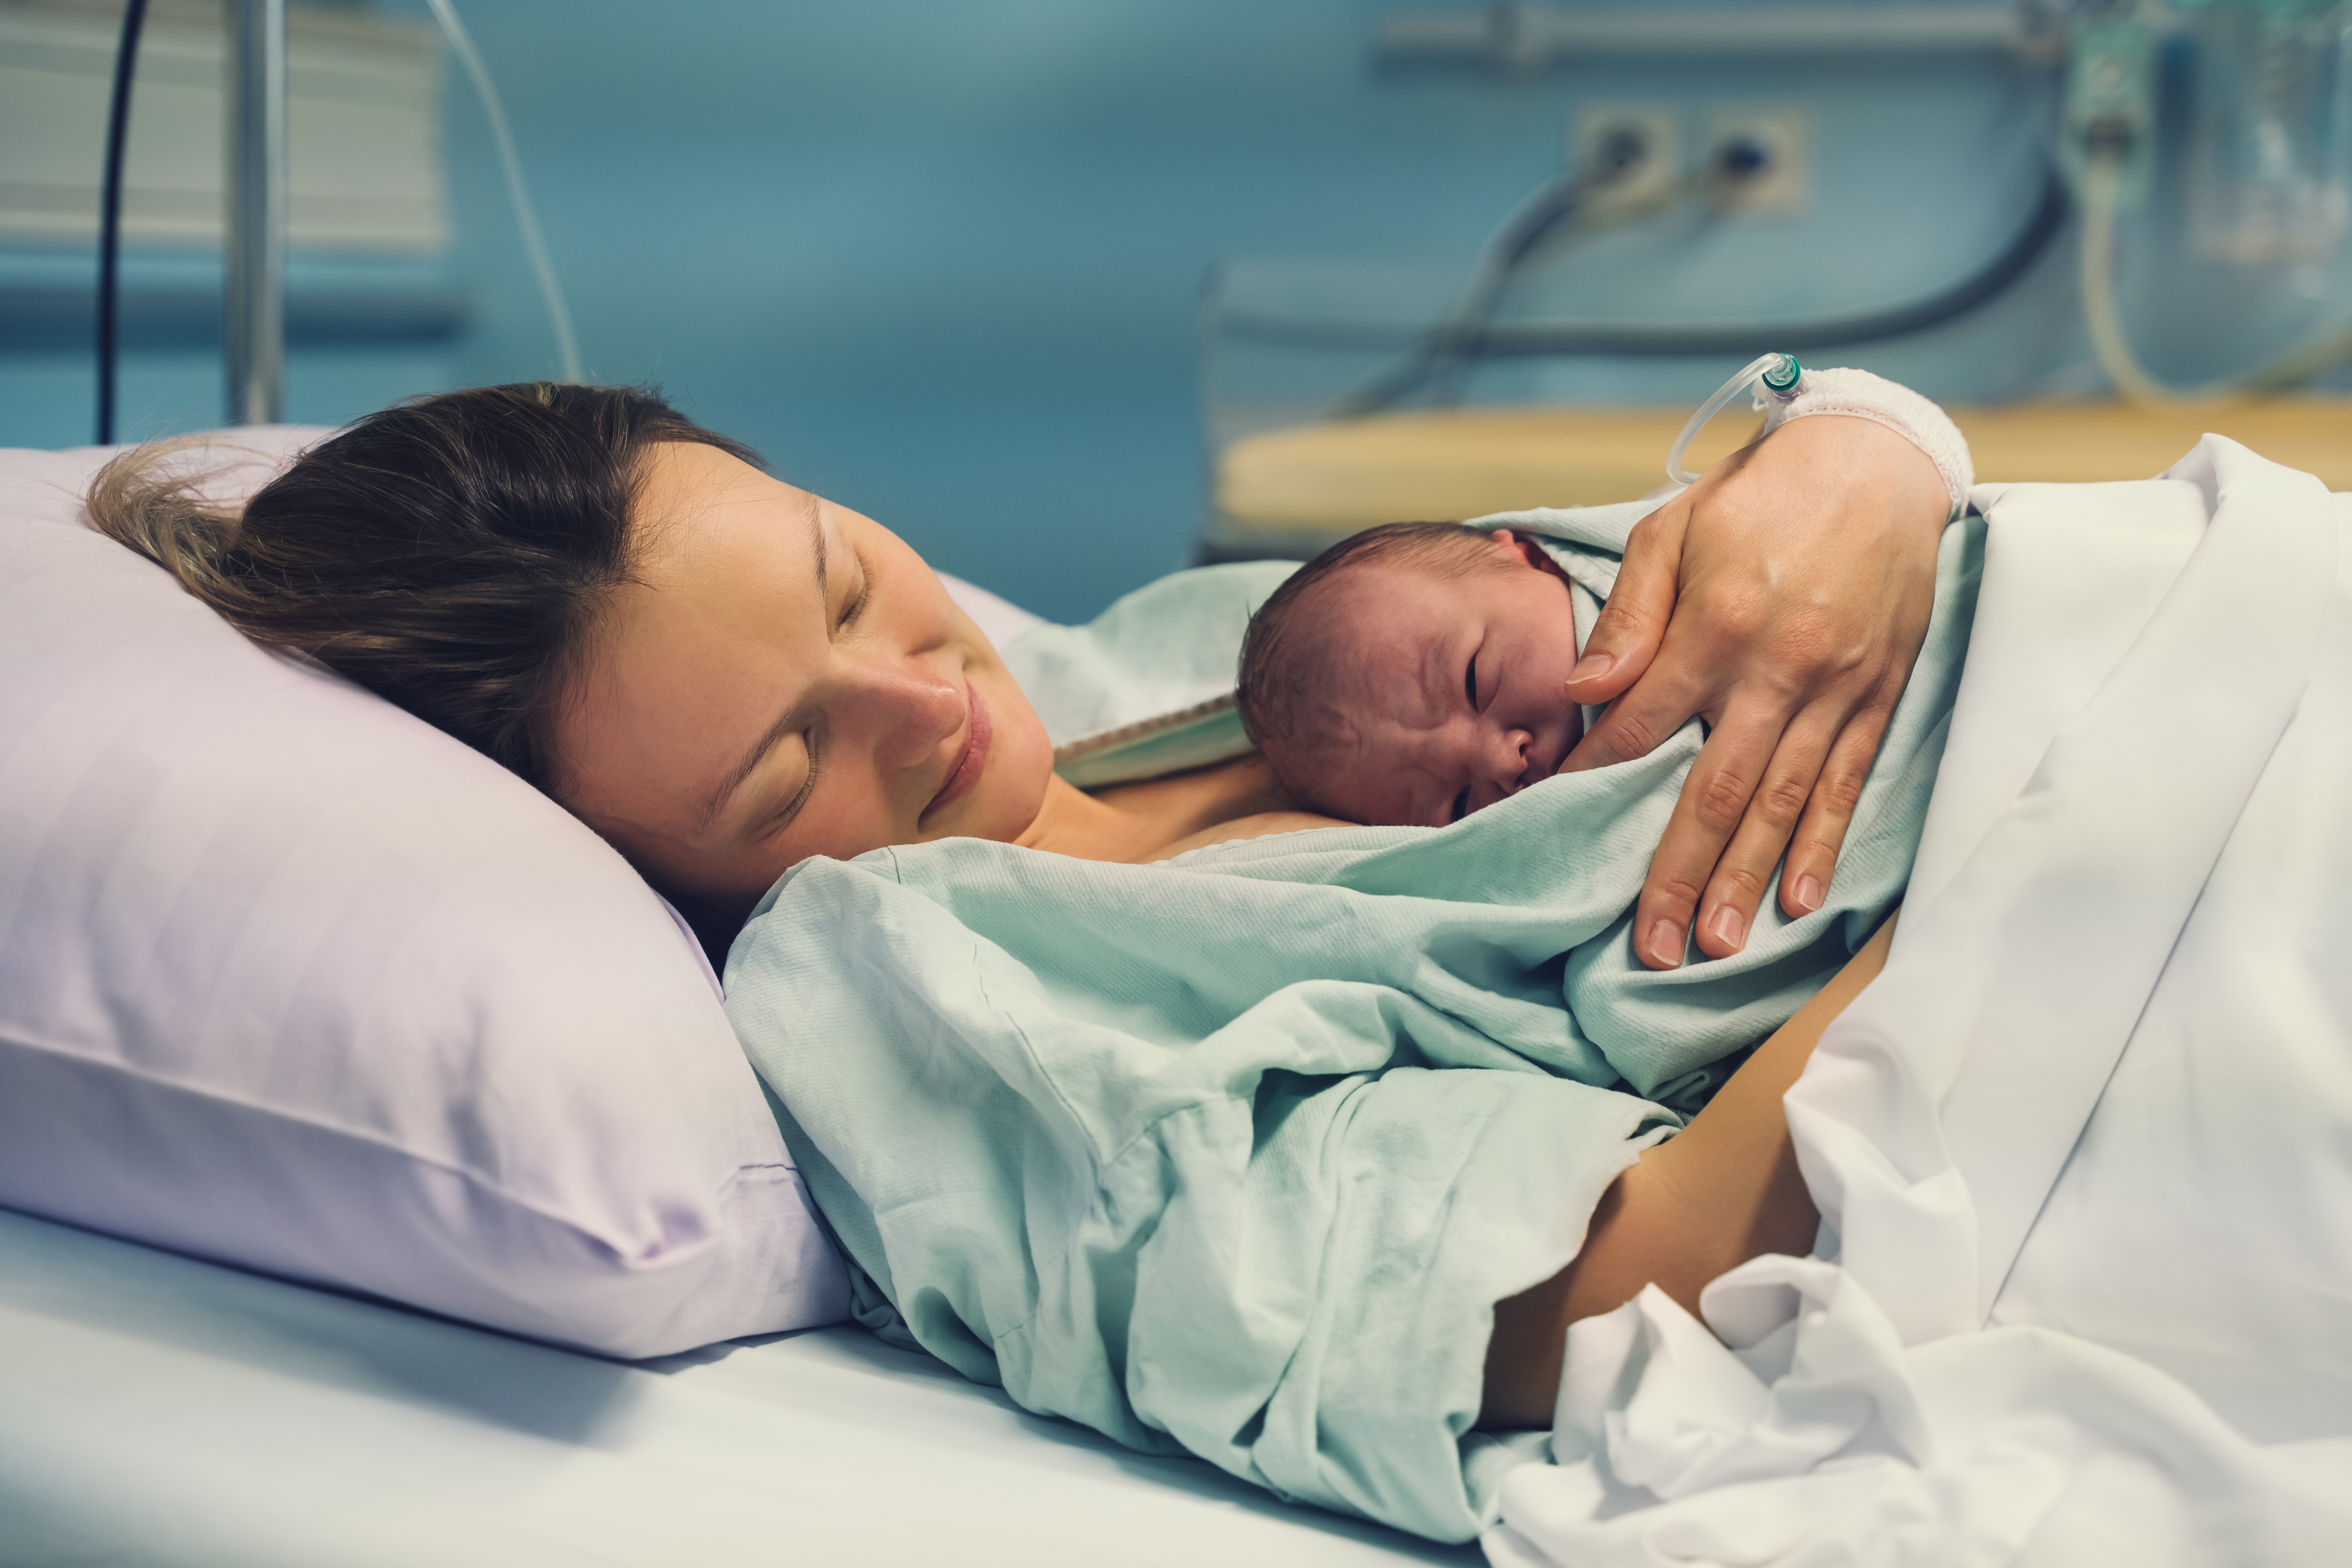 A mother holding a newborn baby | Source: Shutterstock